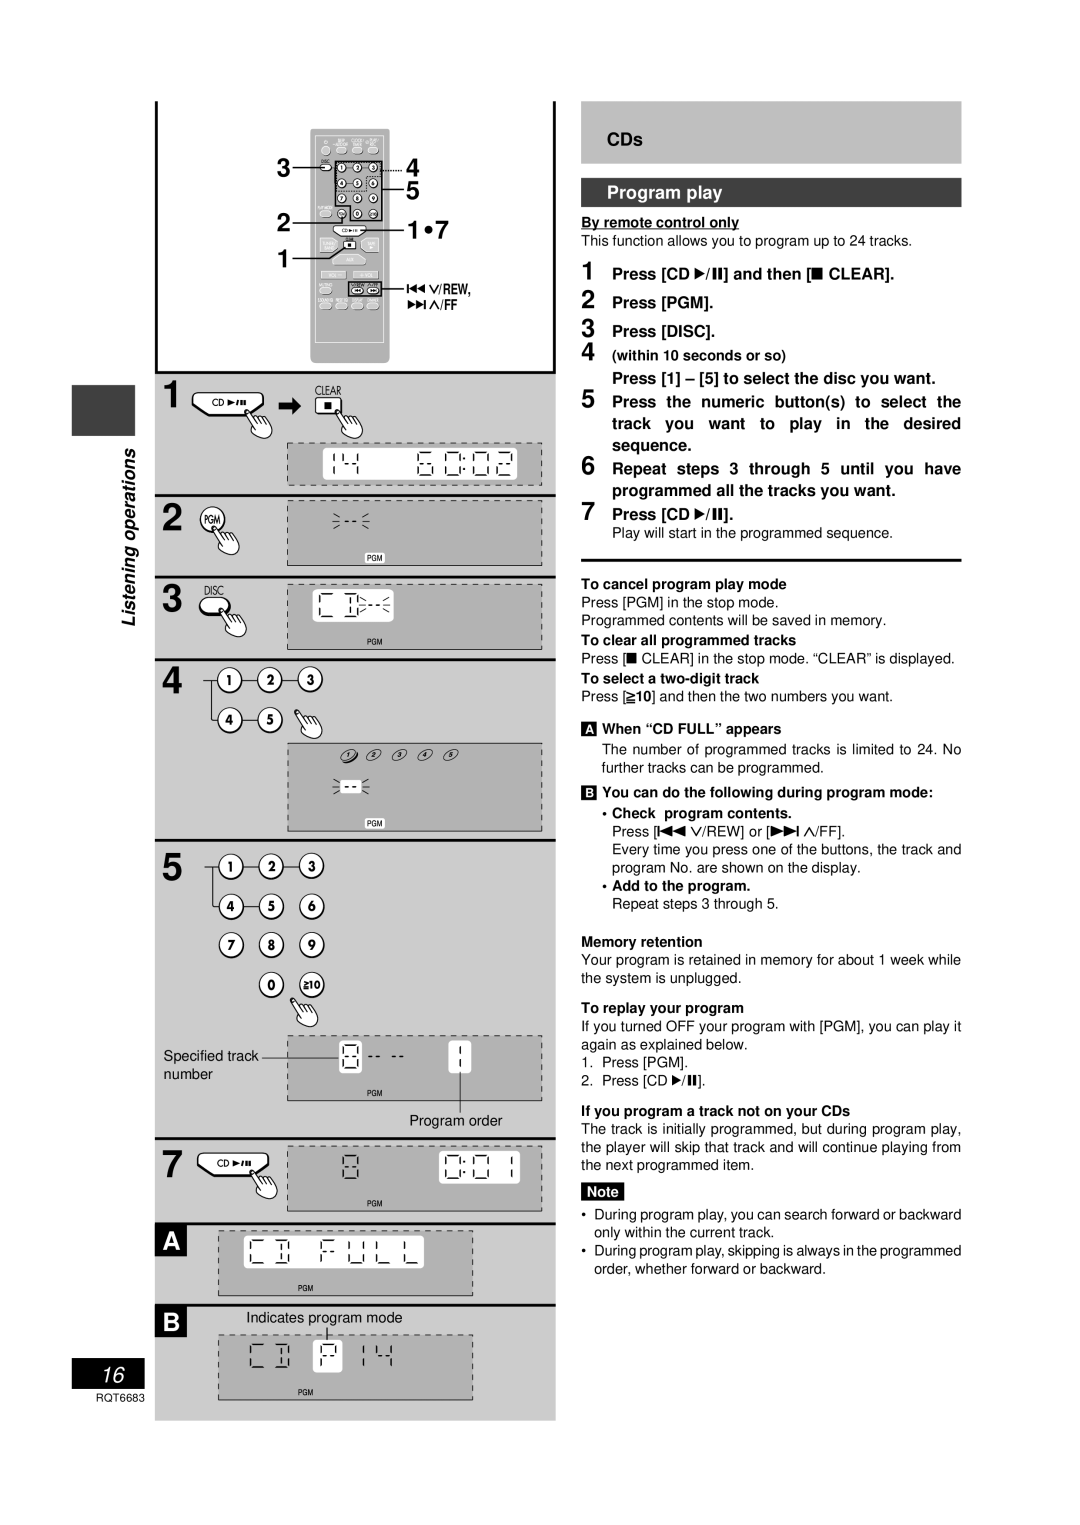 Panasonic SC-PM18 manual 7 CD, Program play, Press CD 2/ J and then L CLEAR. 2 Press PGM, operations, Press DISC 